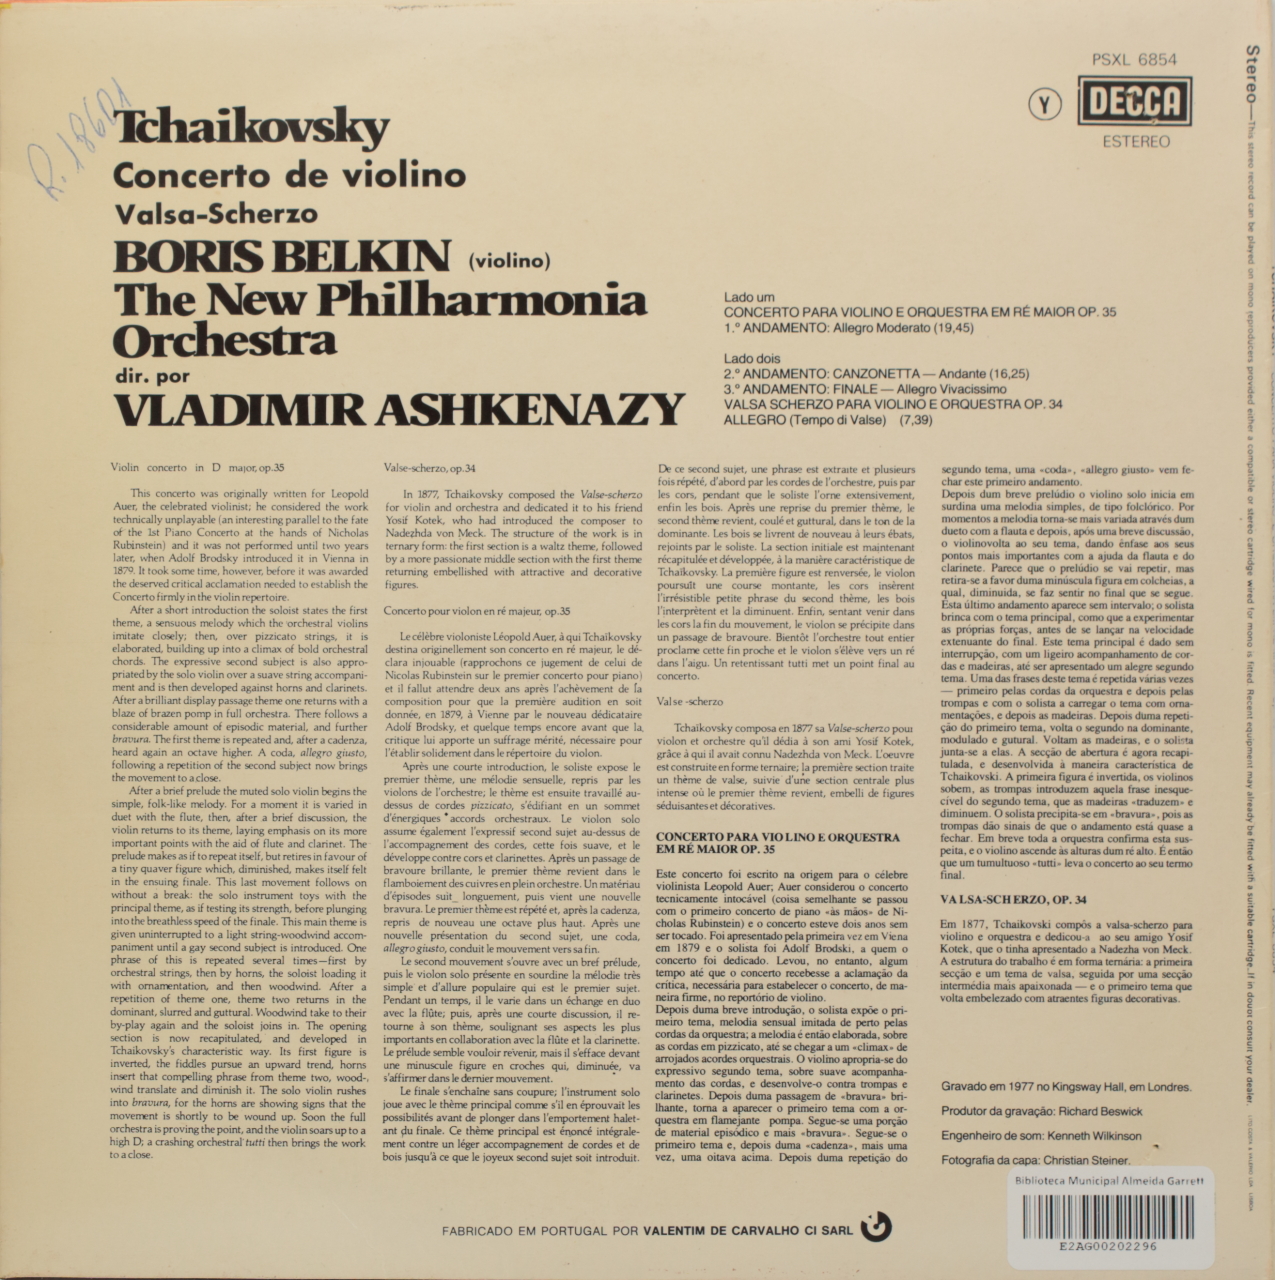 Tchaikovsky: Concerto de violino; Valsa-Scherzo